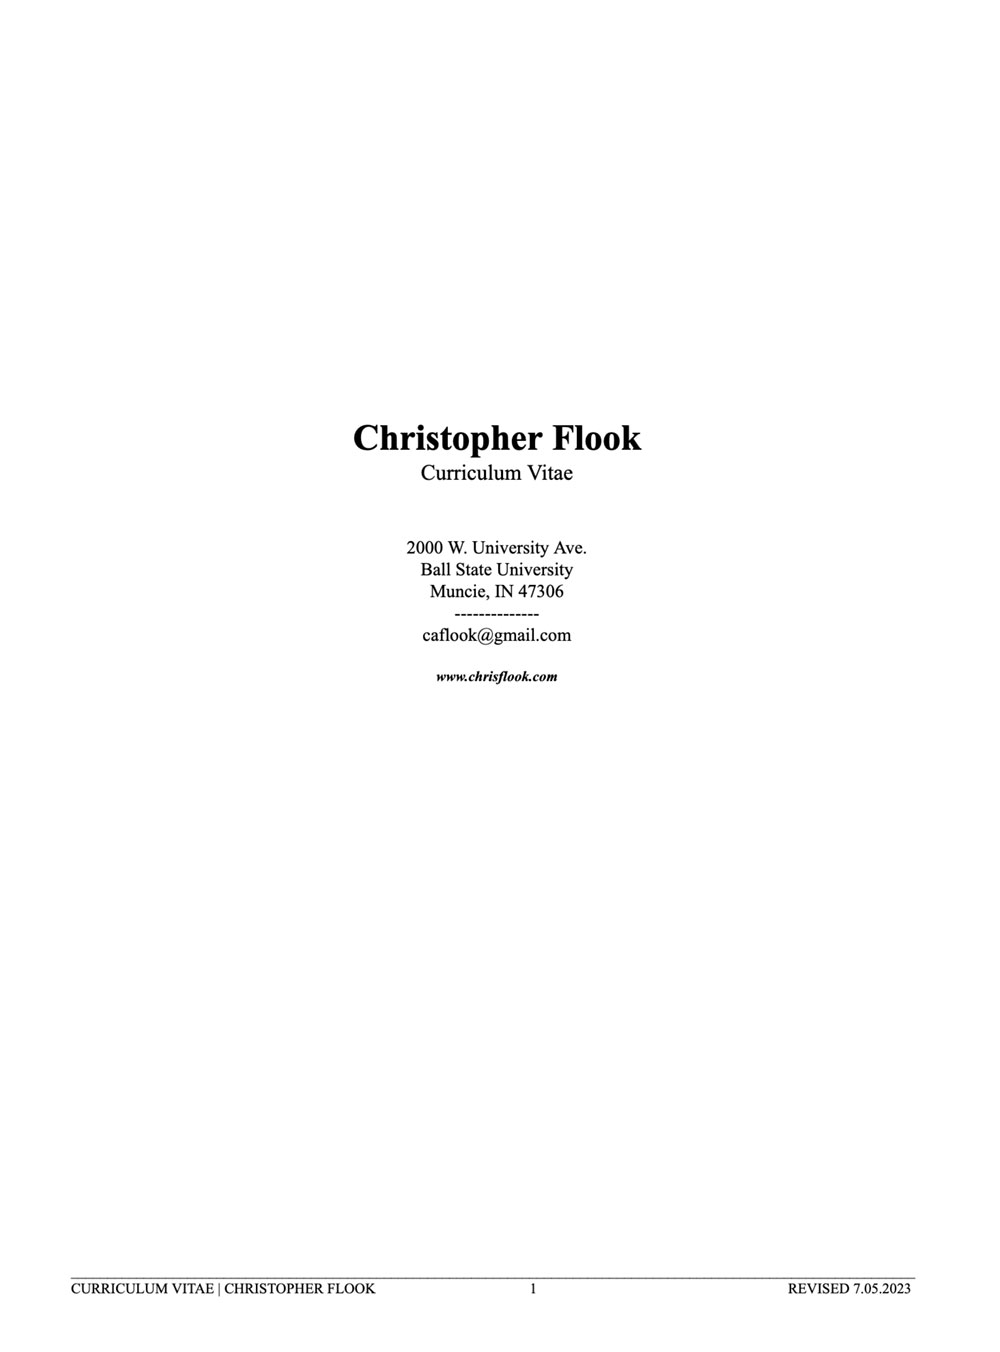 Chris Flook's Curriculum Vitae